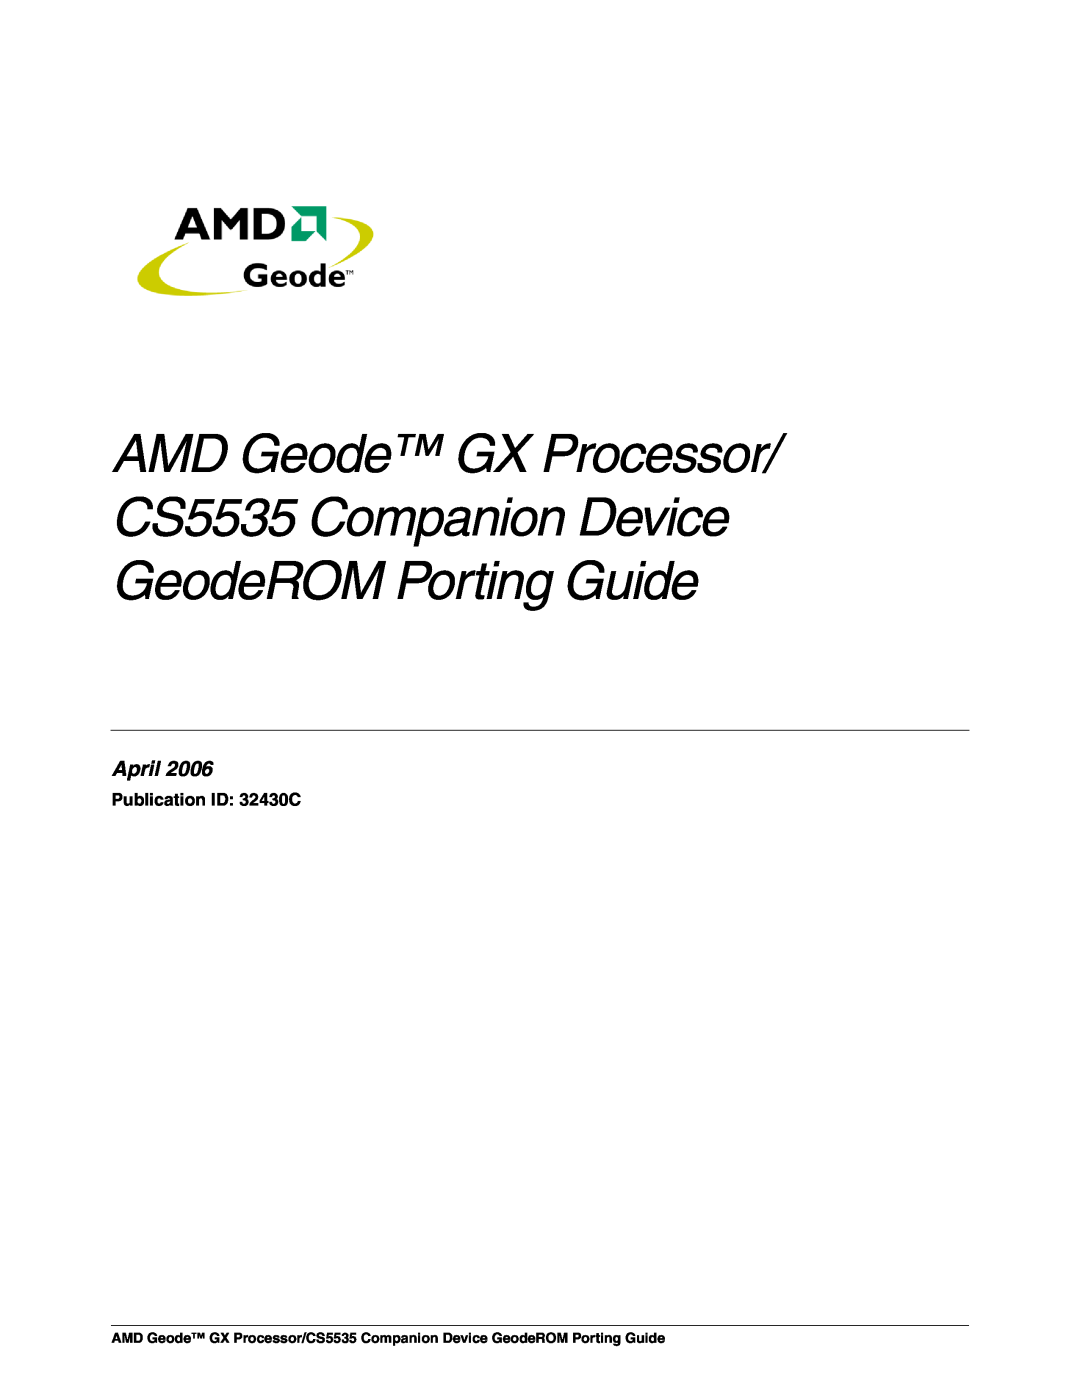 AMD manual Publication ID 32430C, AMD Geode GX Processor CS5535 Companion Device GeodeROM Porting Guide, April 